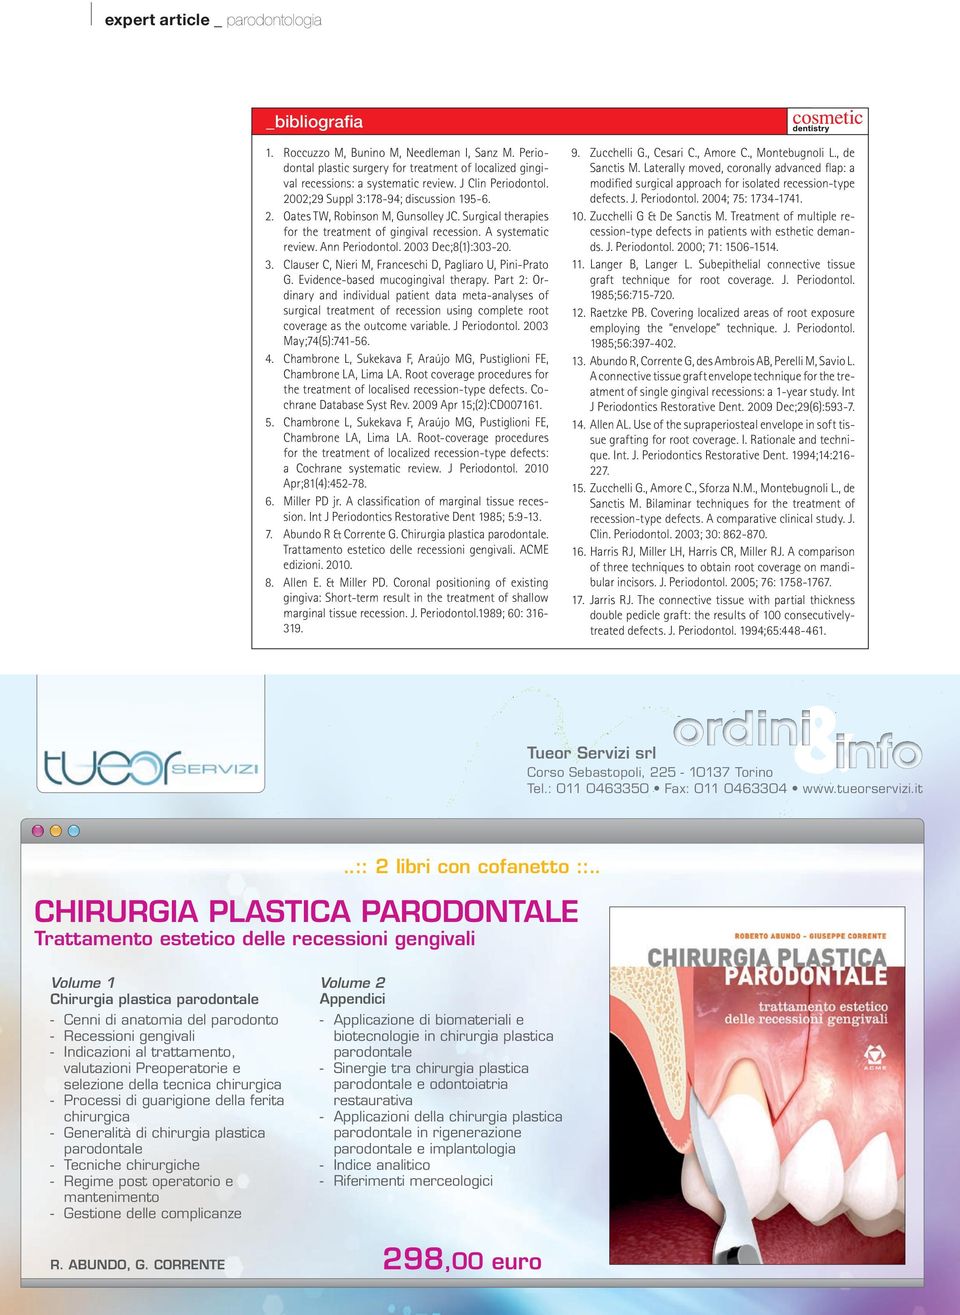 3. Clauser C, Nieri M, Franceschi D, Pagliaro U, Pini-Prato G. Evidence-based mucogingival therapy.